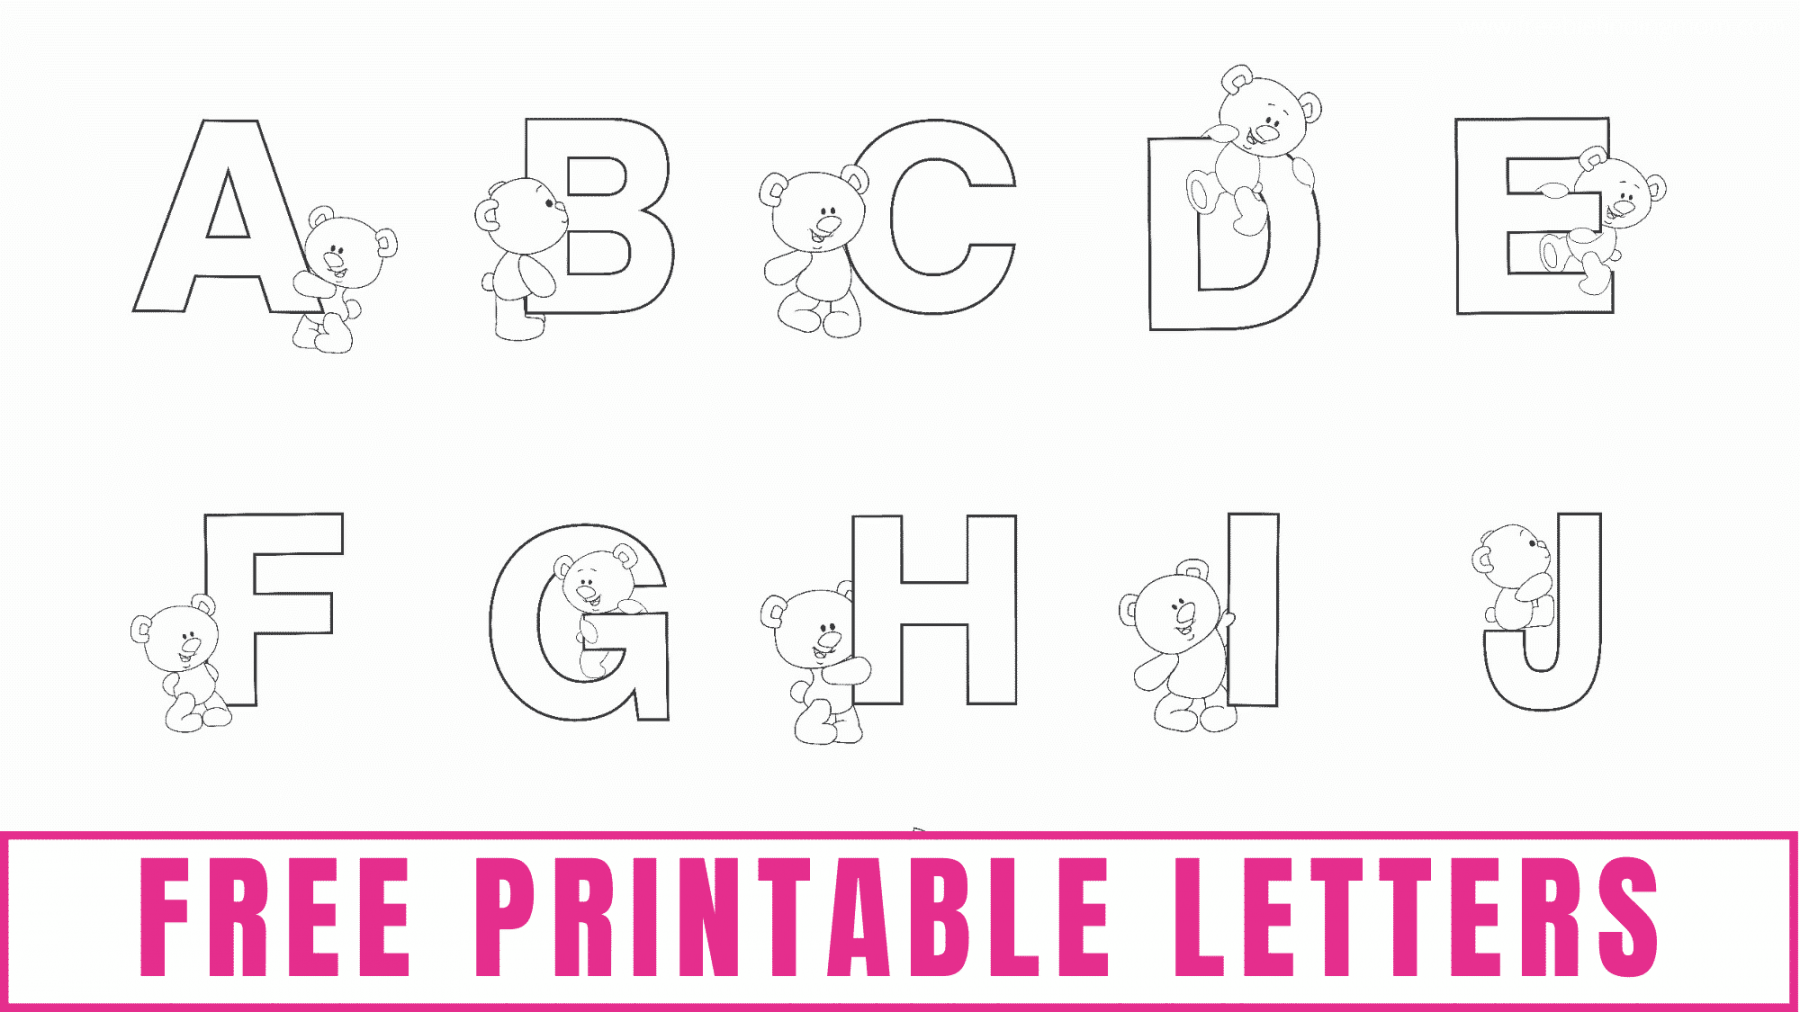 Free Printable Alphabet Letters - Printable - Free Printable Letters and Alphabet Letters - Freebie Finding Mom